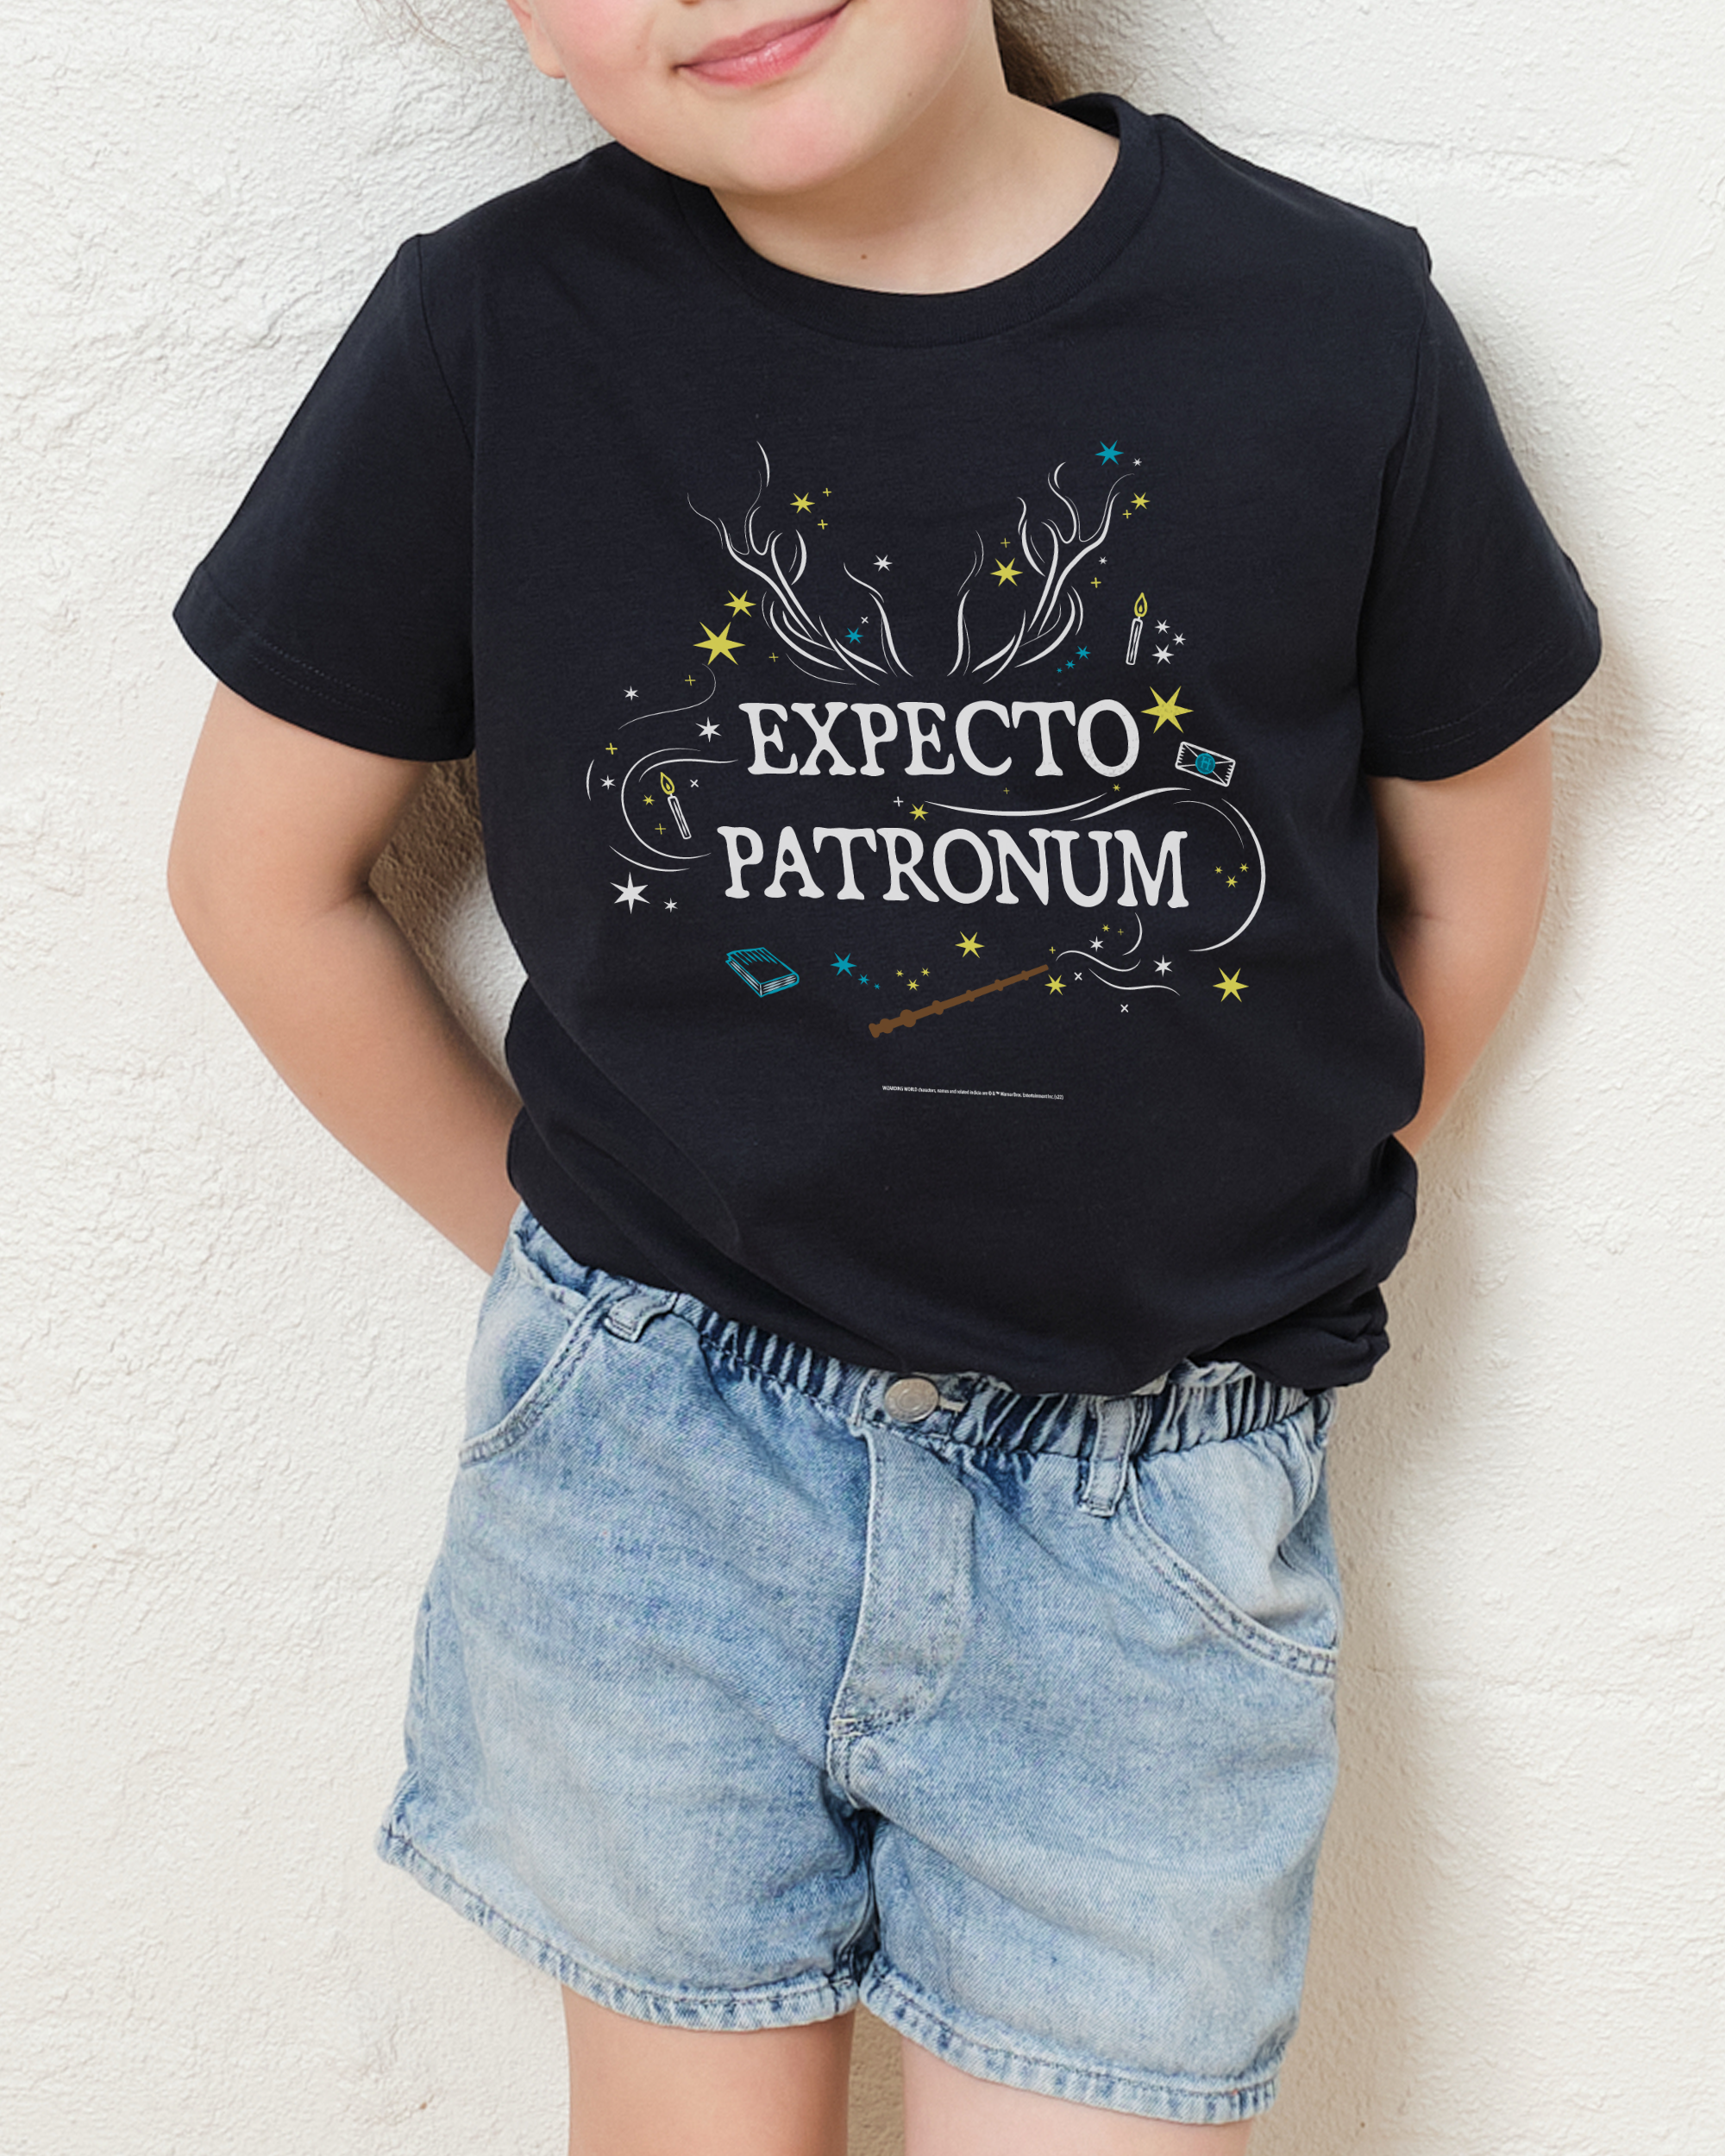 Expecto Patronum Kids T-Shirt